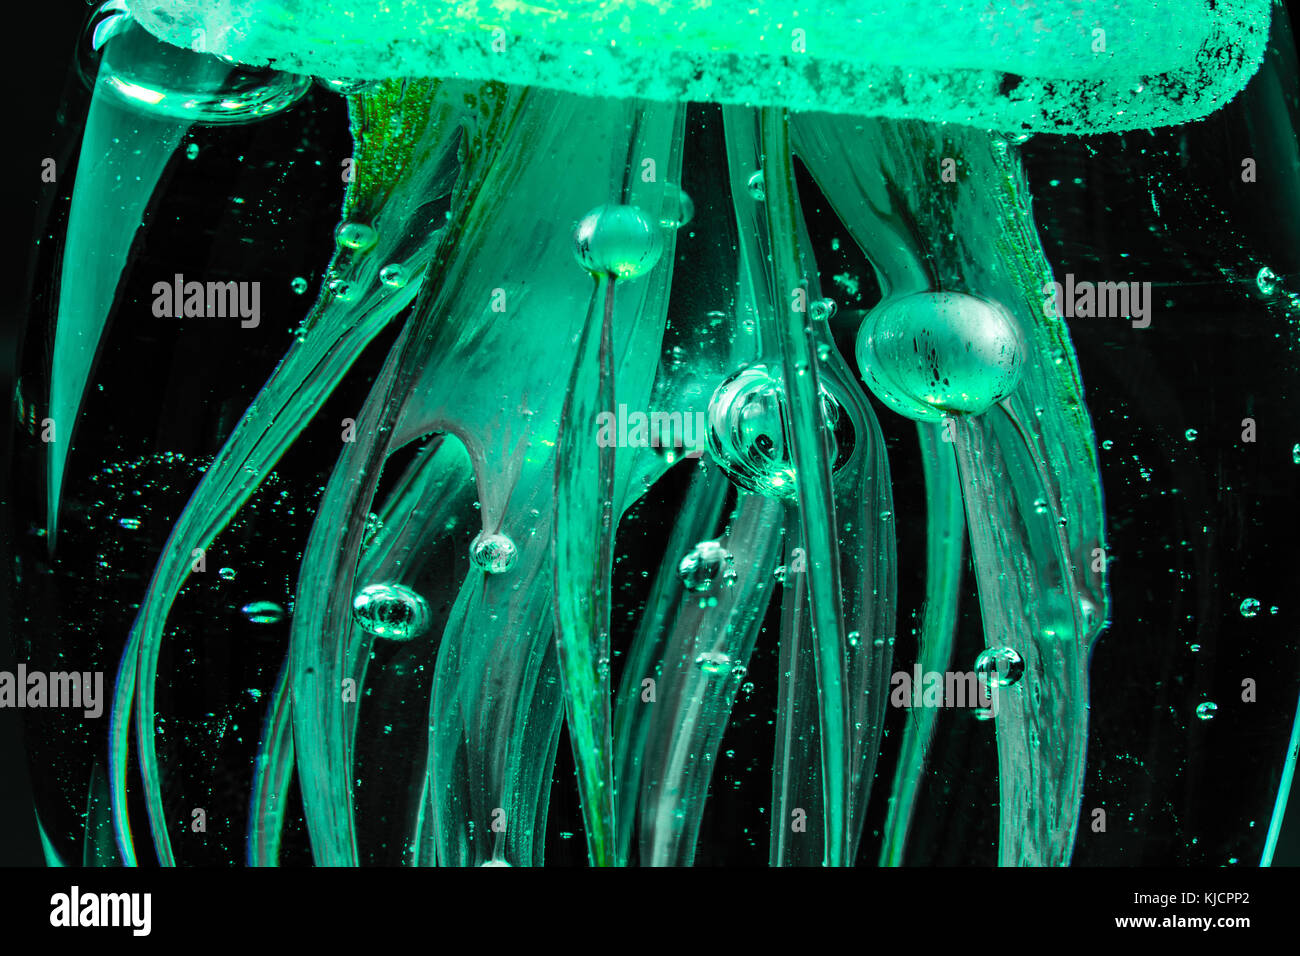 Macro photograph of a glass sculpture. Glass sculpture resembling a jellyfish. Stock Photo